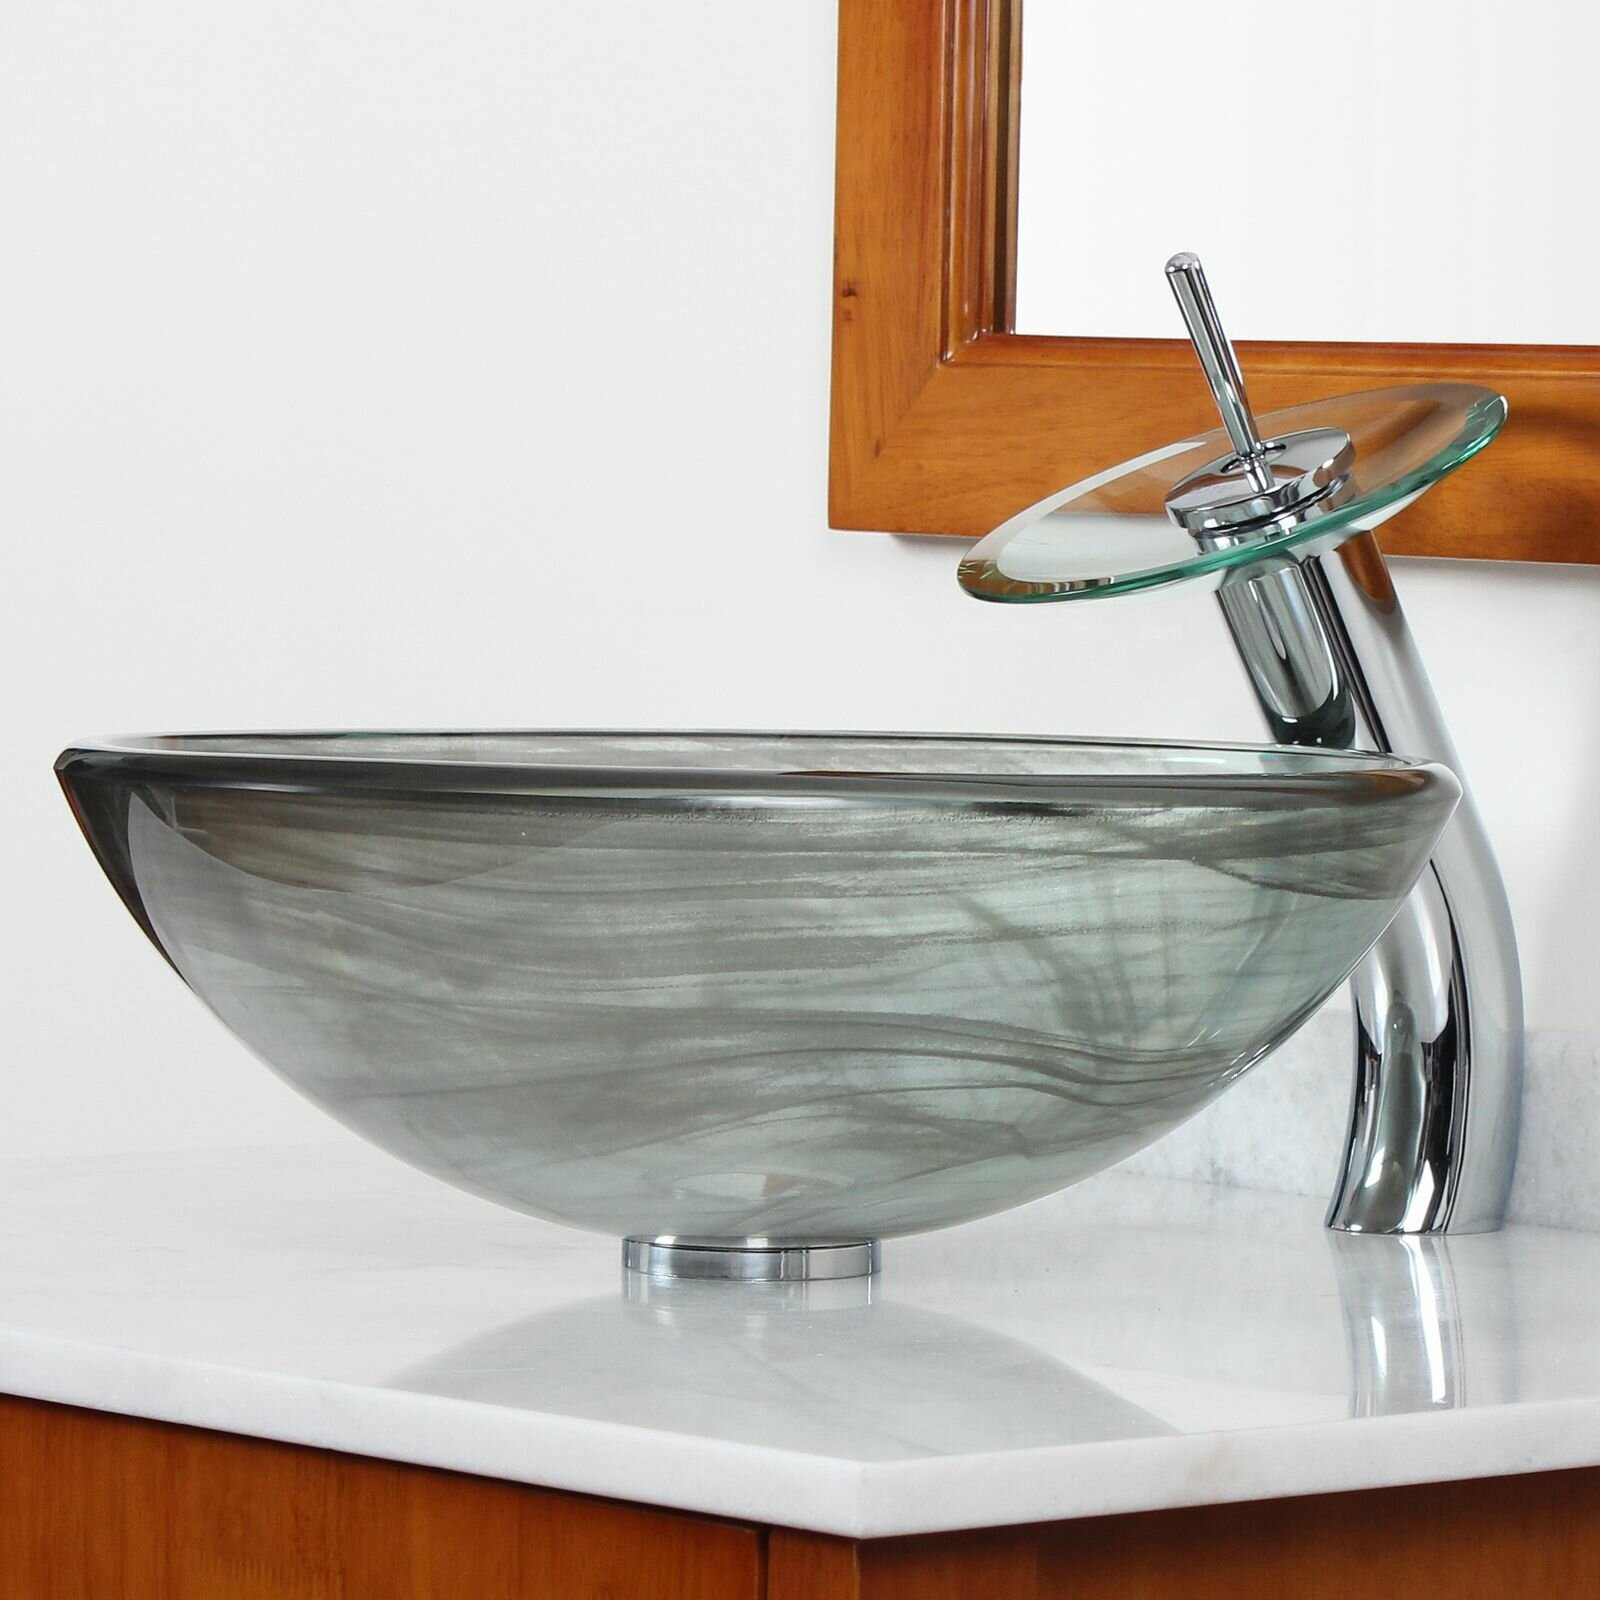 Sink Bowls For Bathroom
 Elite Double Layered Tempered Glass Bowl Vessel Bathroom